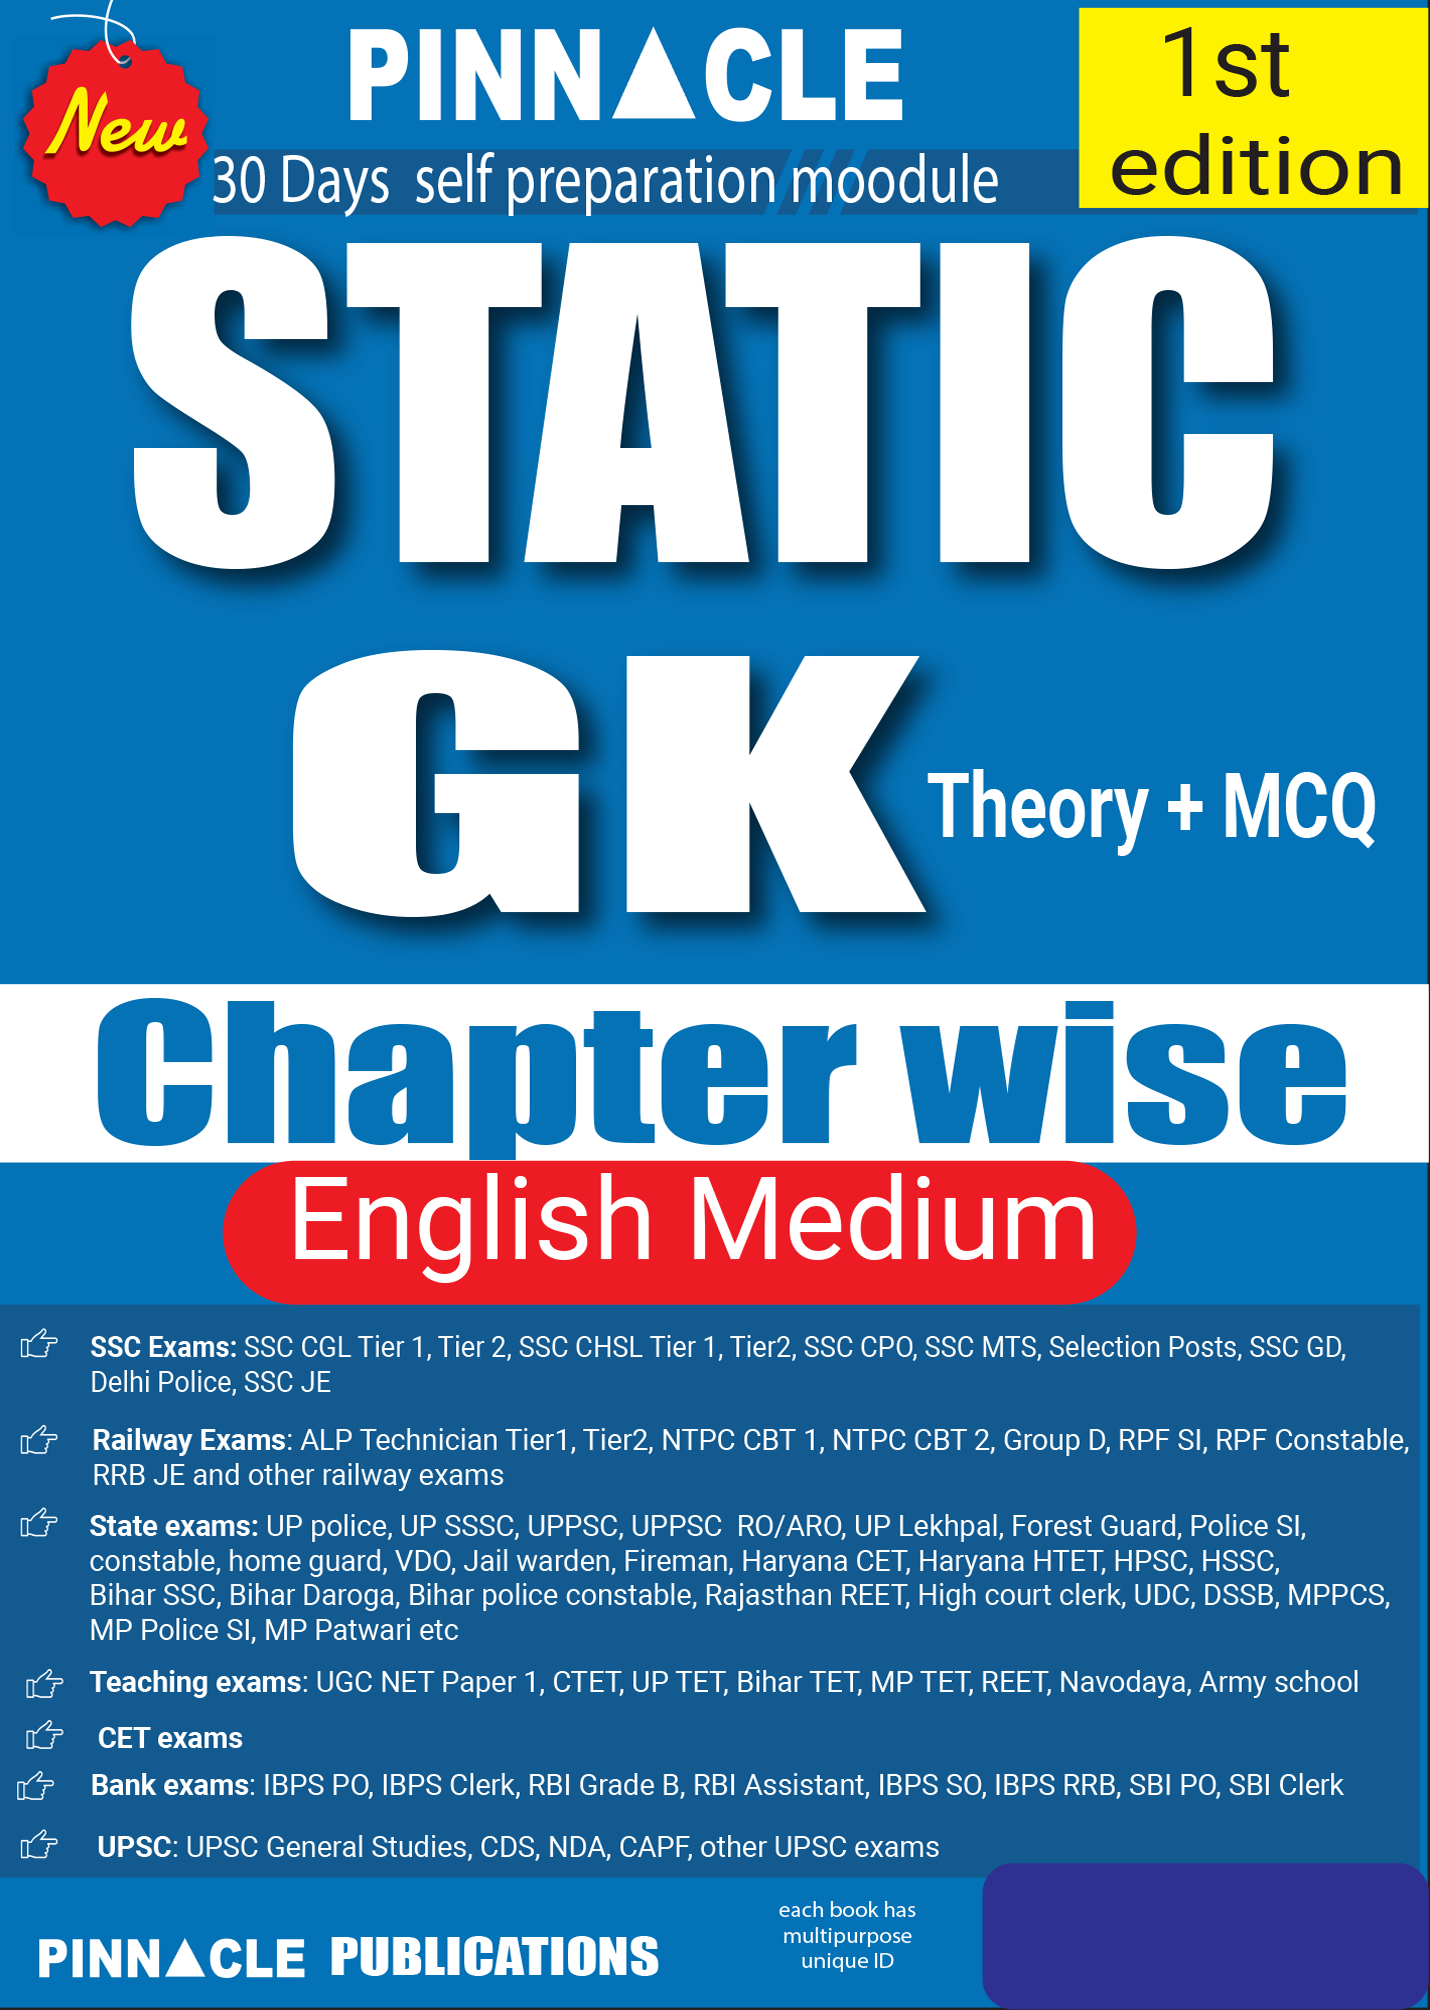 Pinnacle static gk book in english medium